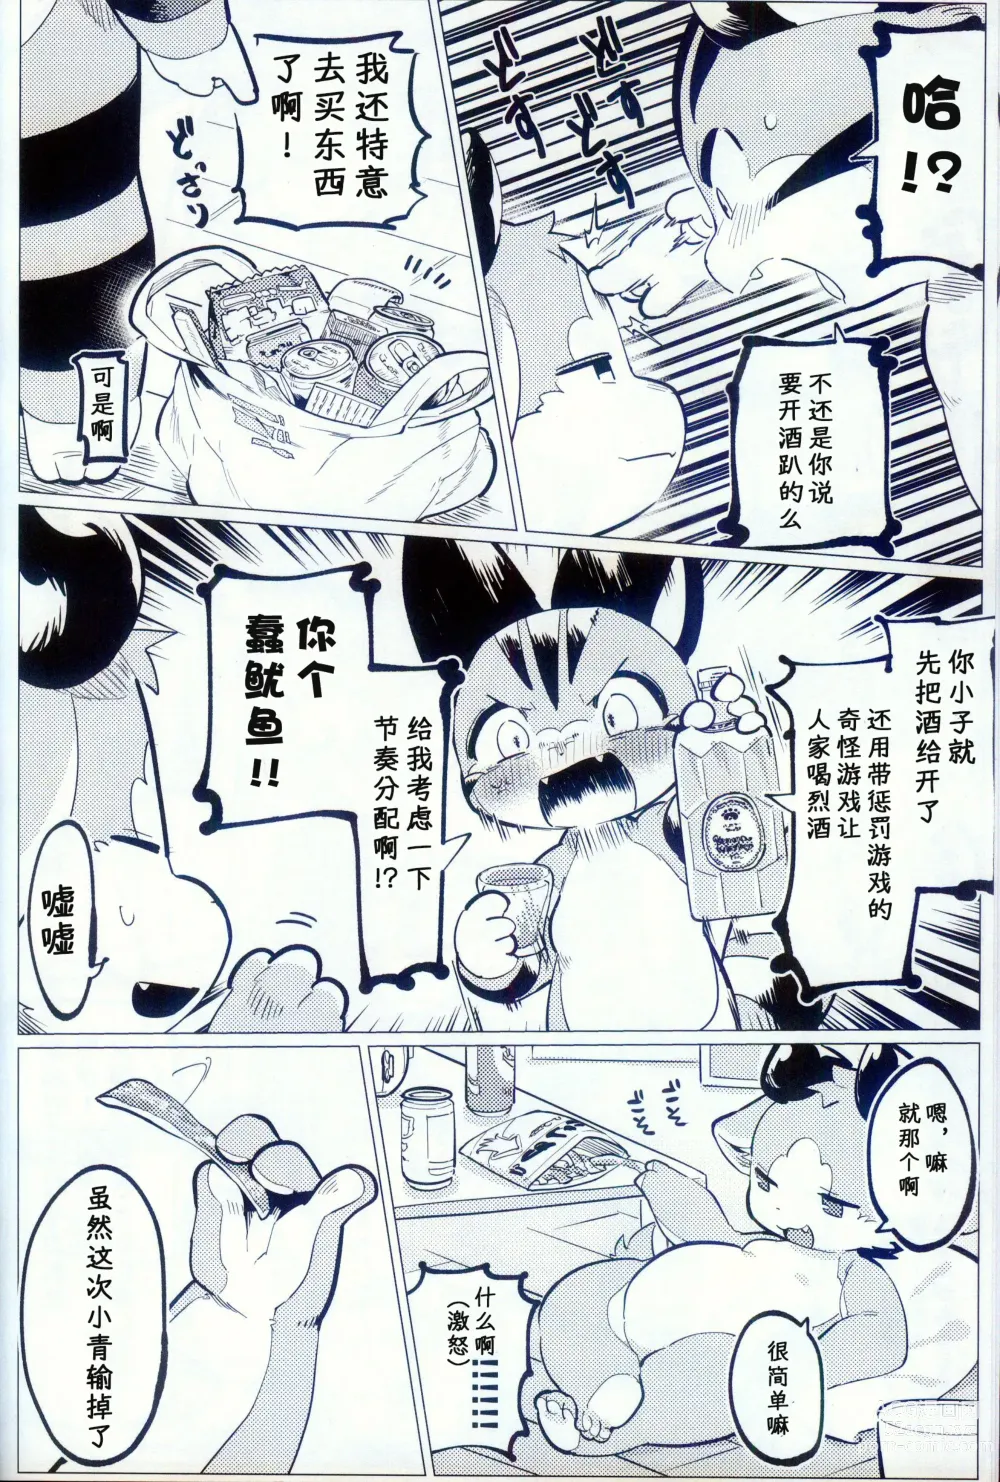 Page 5 of doujinshi 趁着酒劲